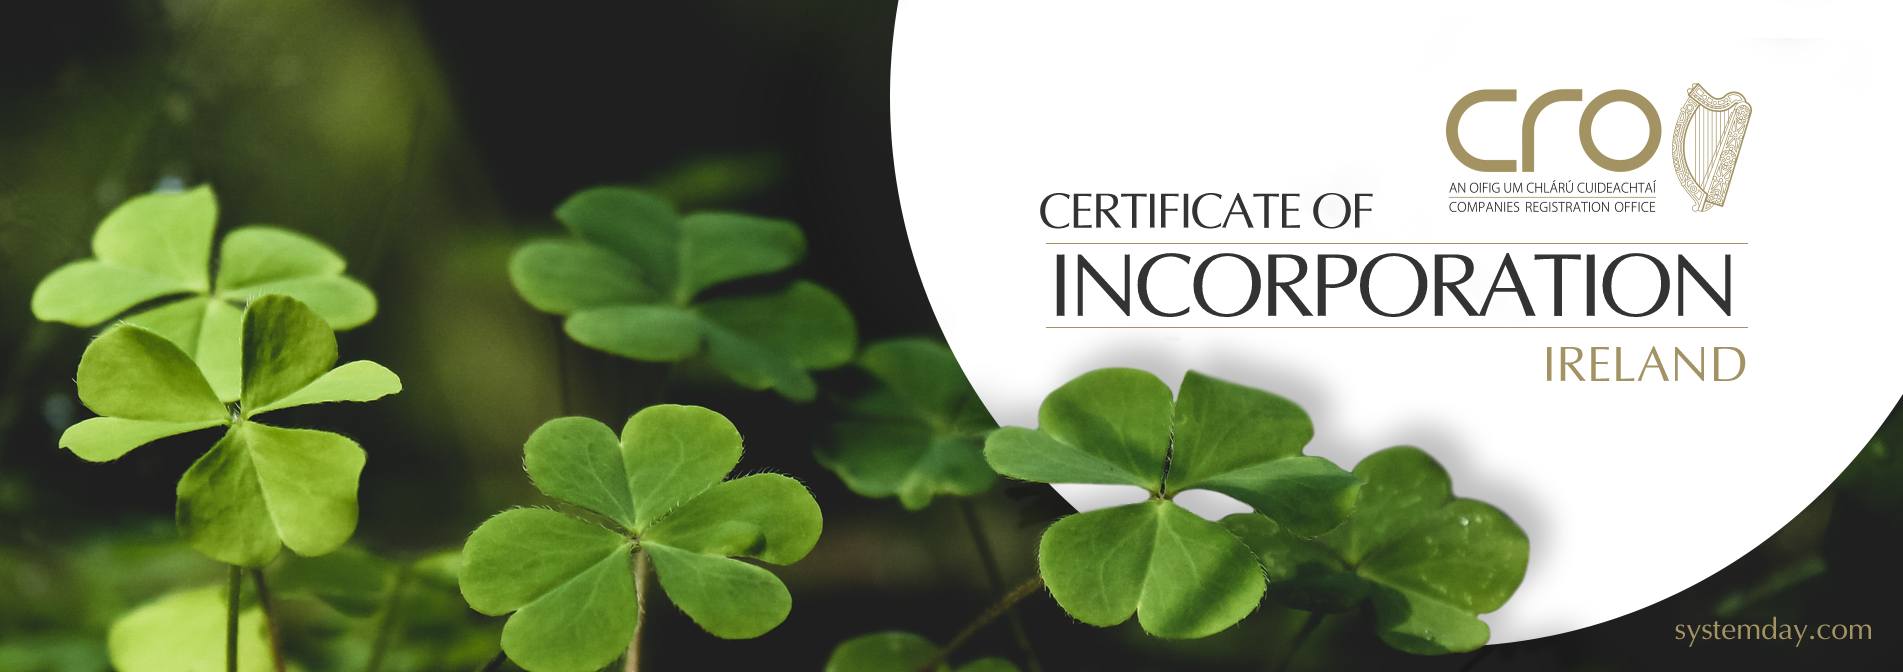 Ireland Certificate of Incorporation